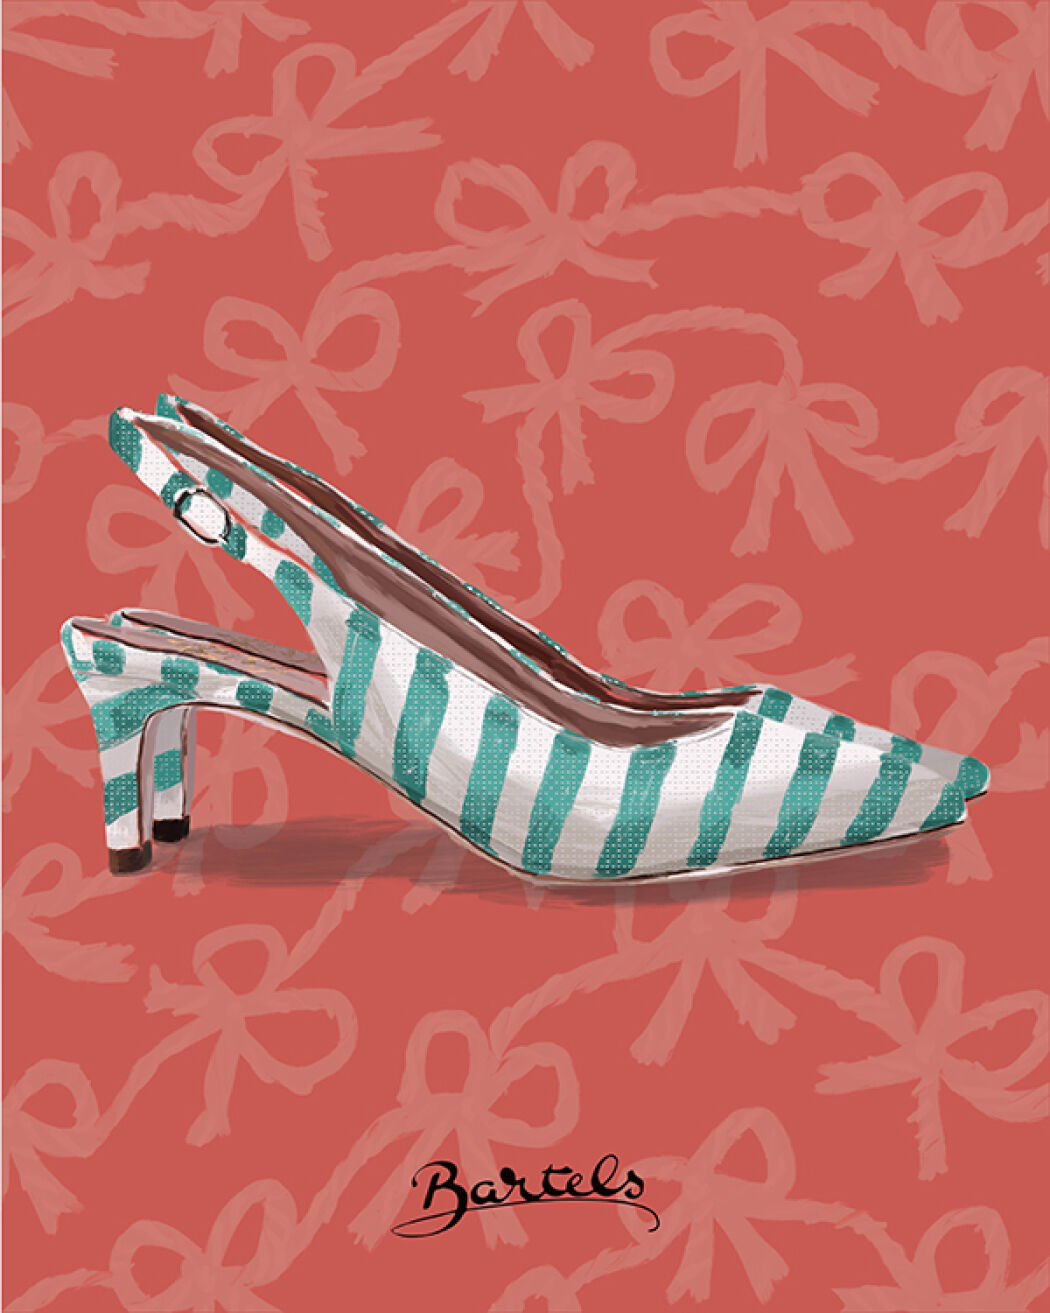 Fashion illustration by Christina Gliha for Bartels Shoe brand campaign